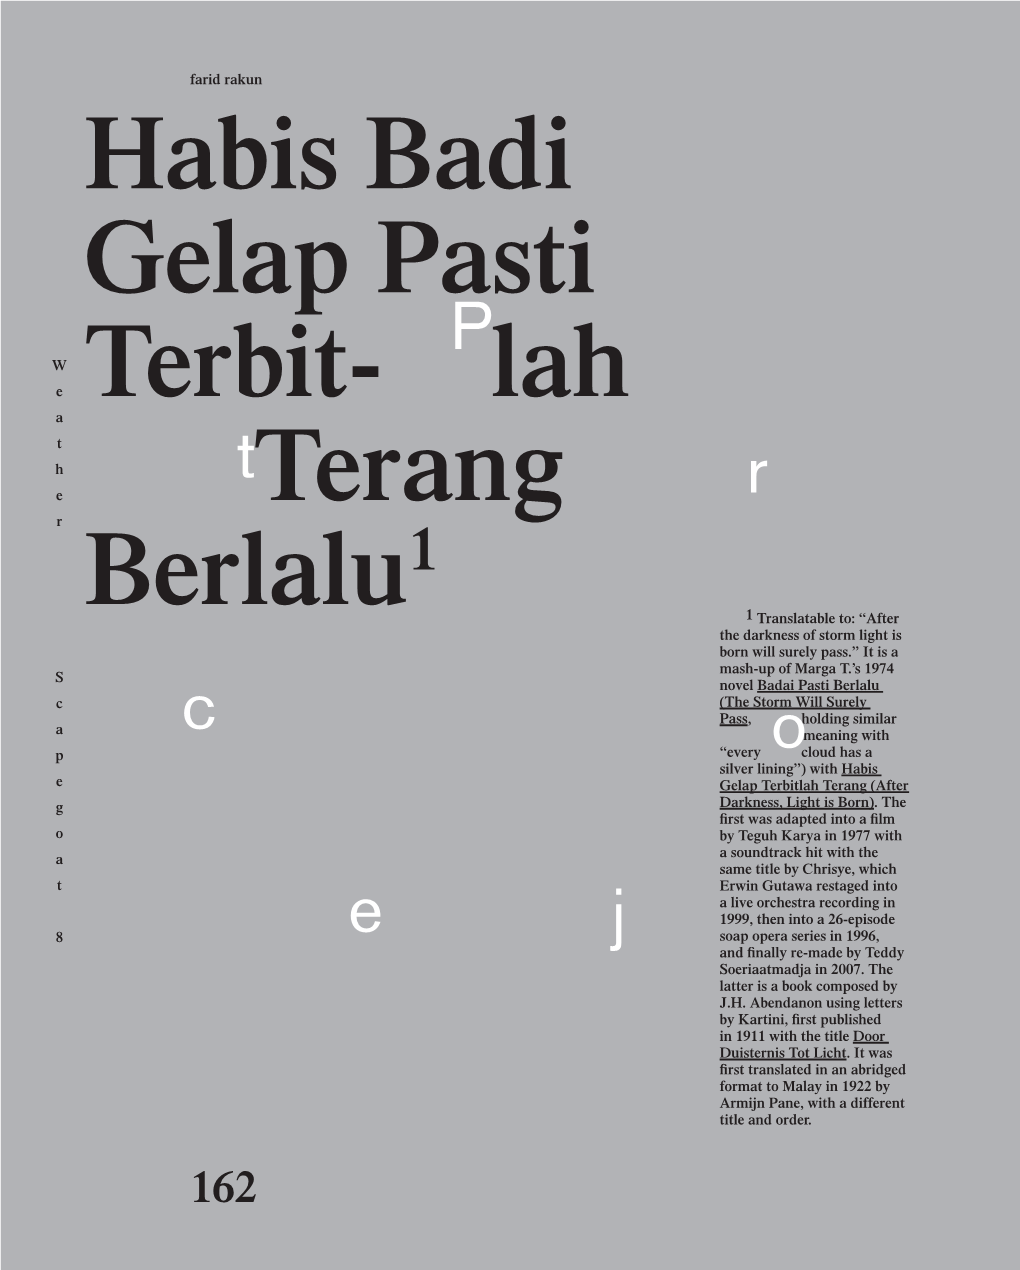 Habis Badi Gelap Pasti Terbitlah Terang Berlalu the Following Lexicon Is an Effort to Clarify How Indonesian Politics Is Naturalized